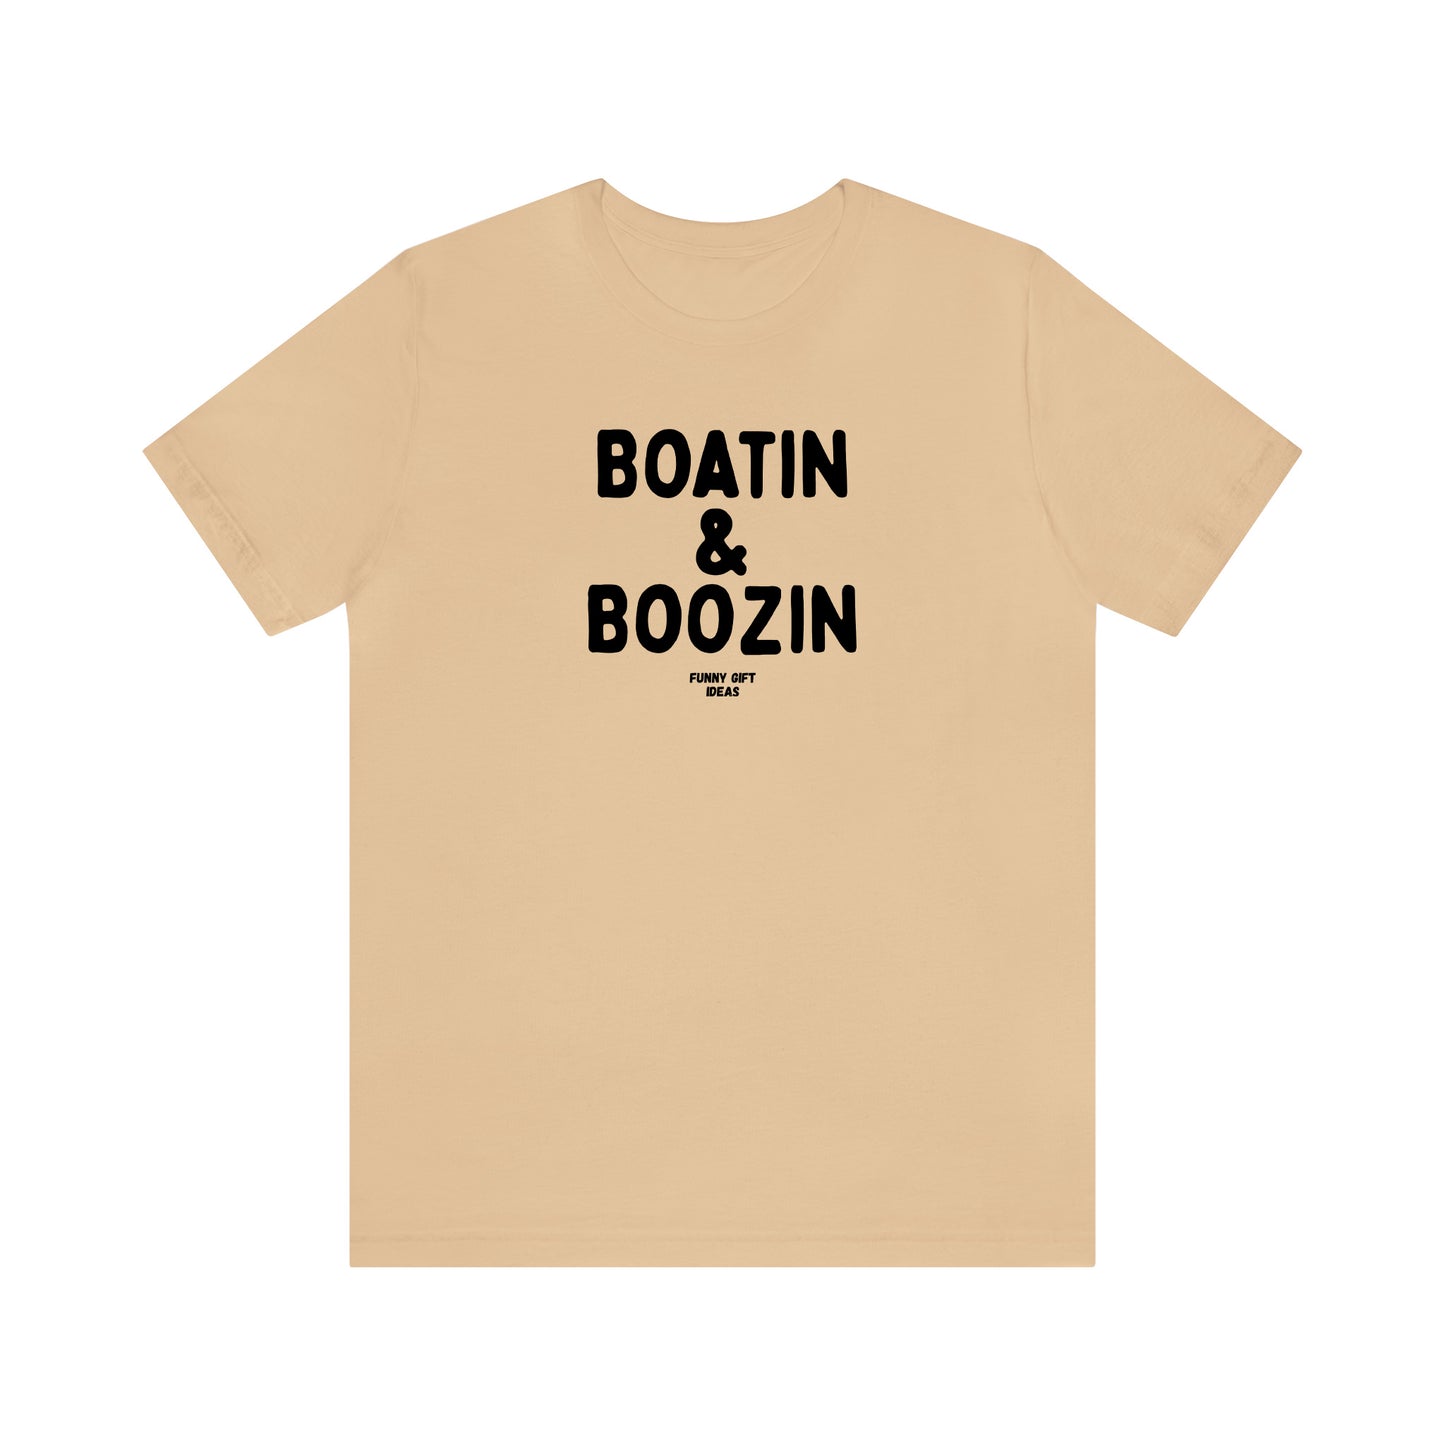 Funny Shirts for Women - Boatin & Boozin - Women's T Shirts